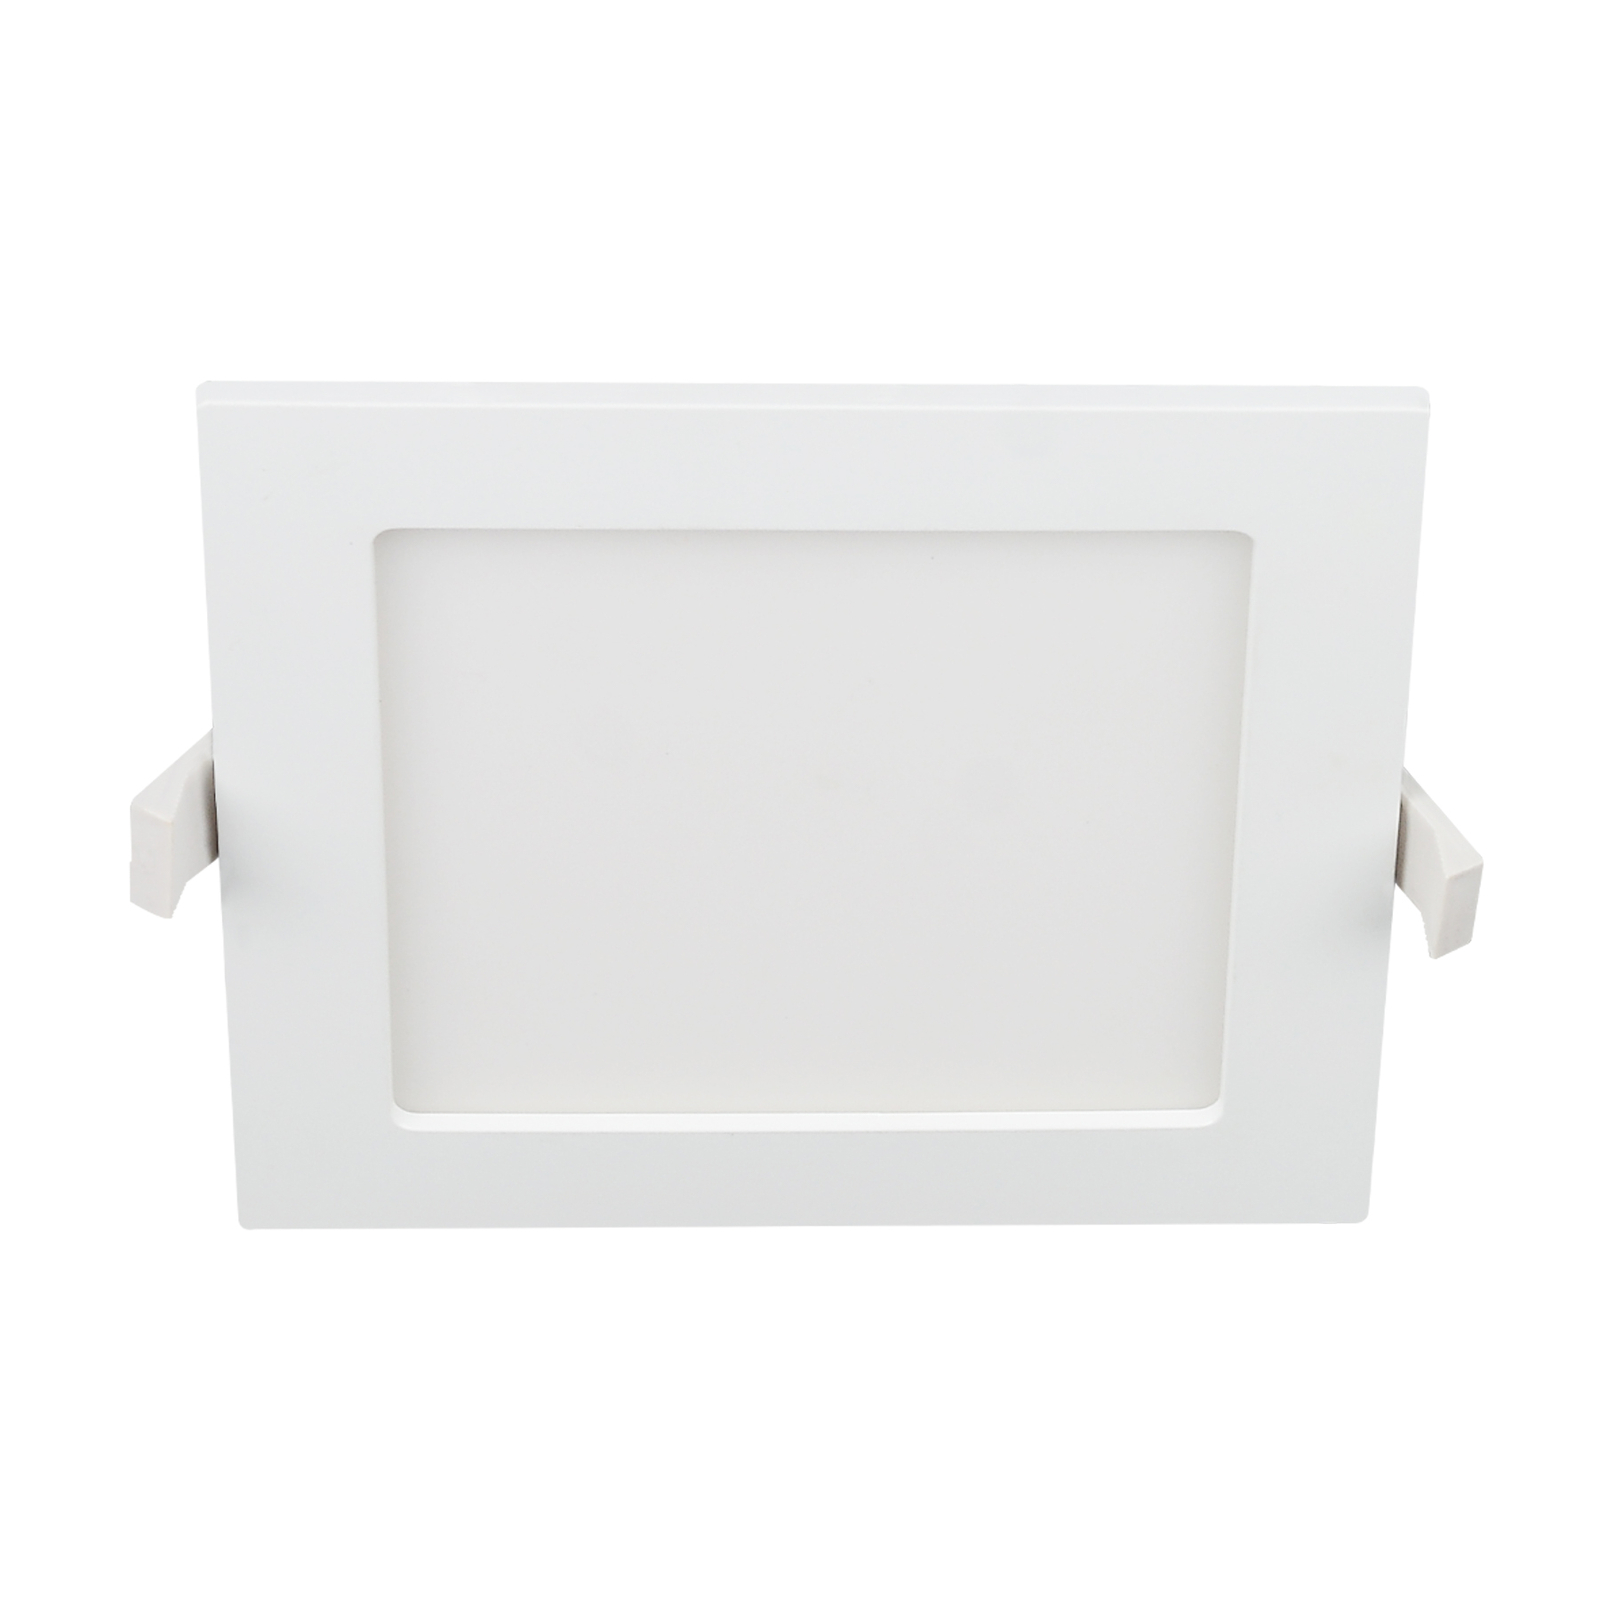 Prios Helina LED-inbyggnadslampa, vit, 22 cm, 24 W